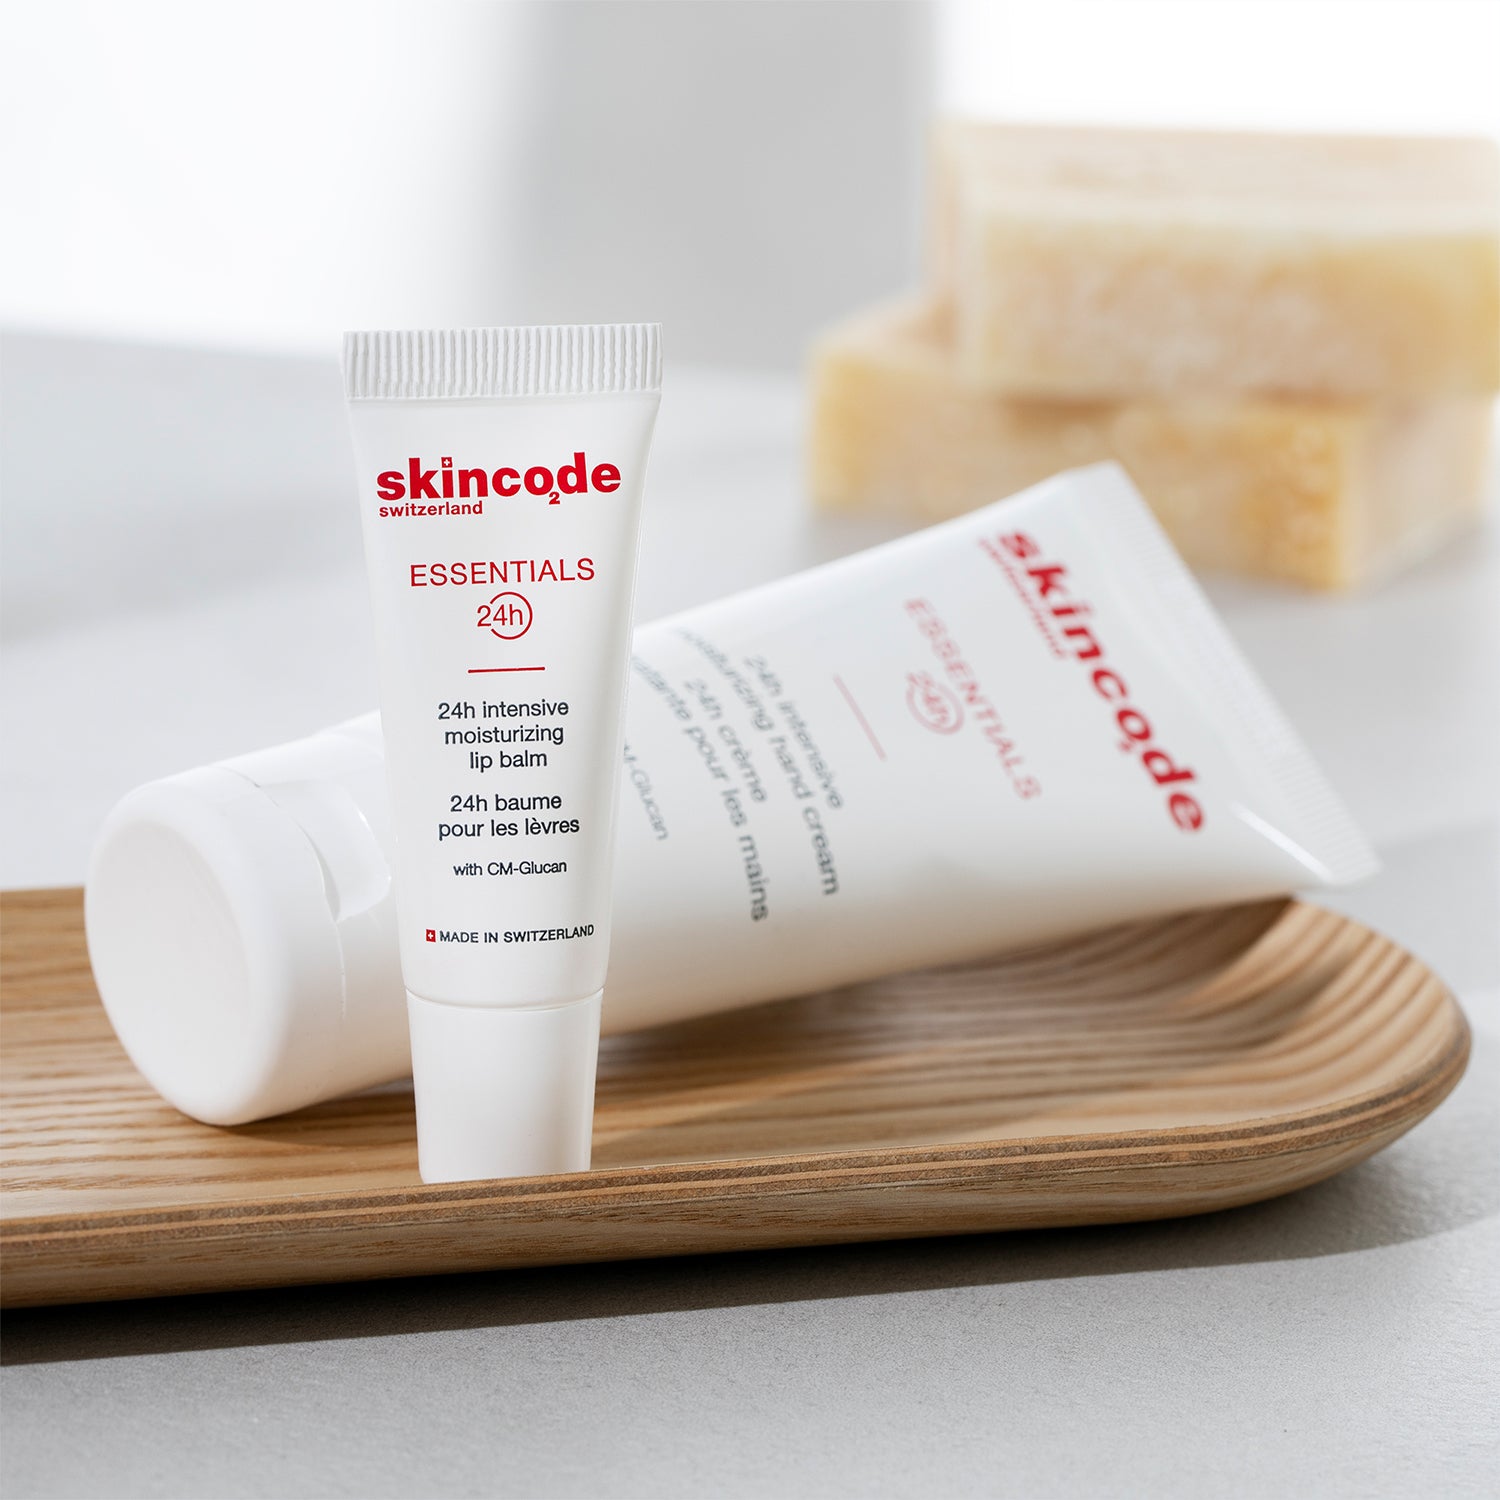 SkinCode Essentials, 24h Intensive Moisturizing Lip Balm